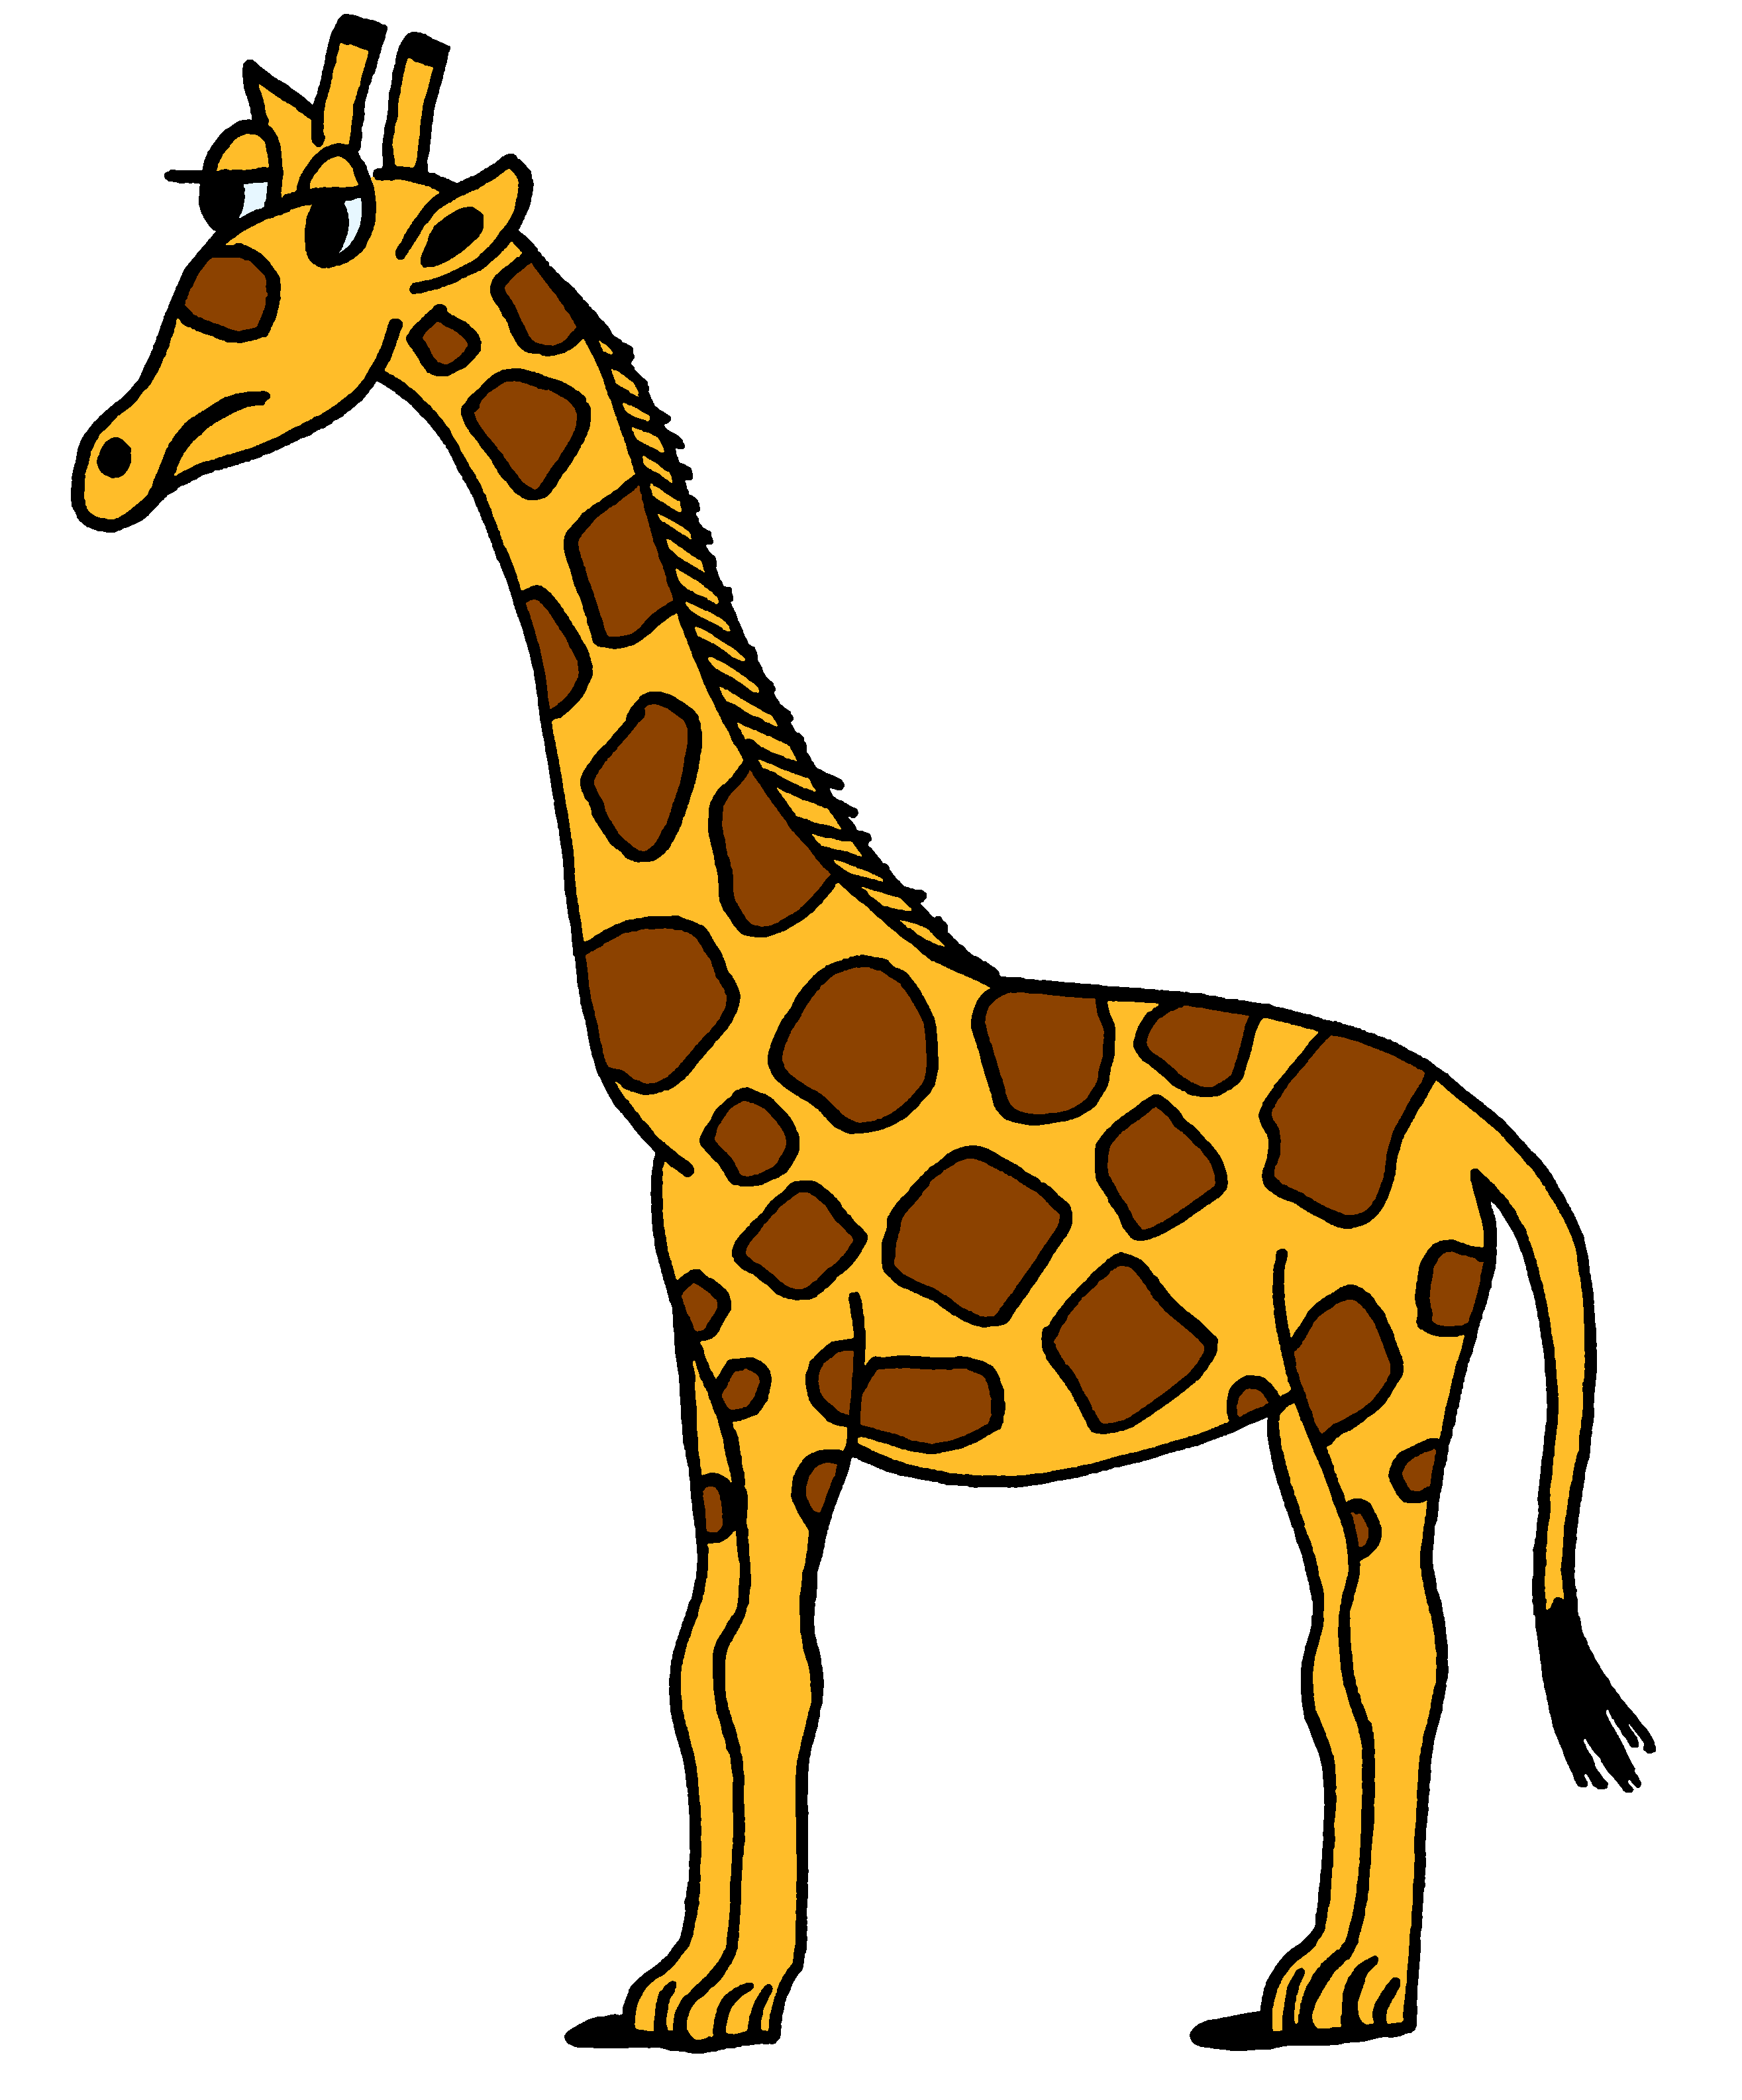 Giraffe clipart 1 - Cliparting.com